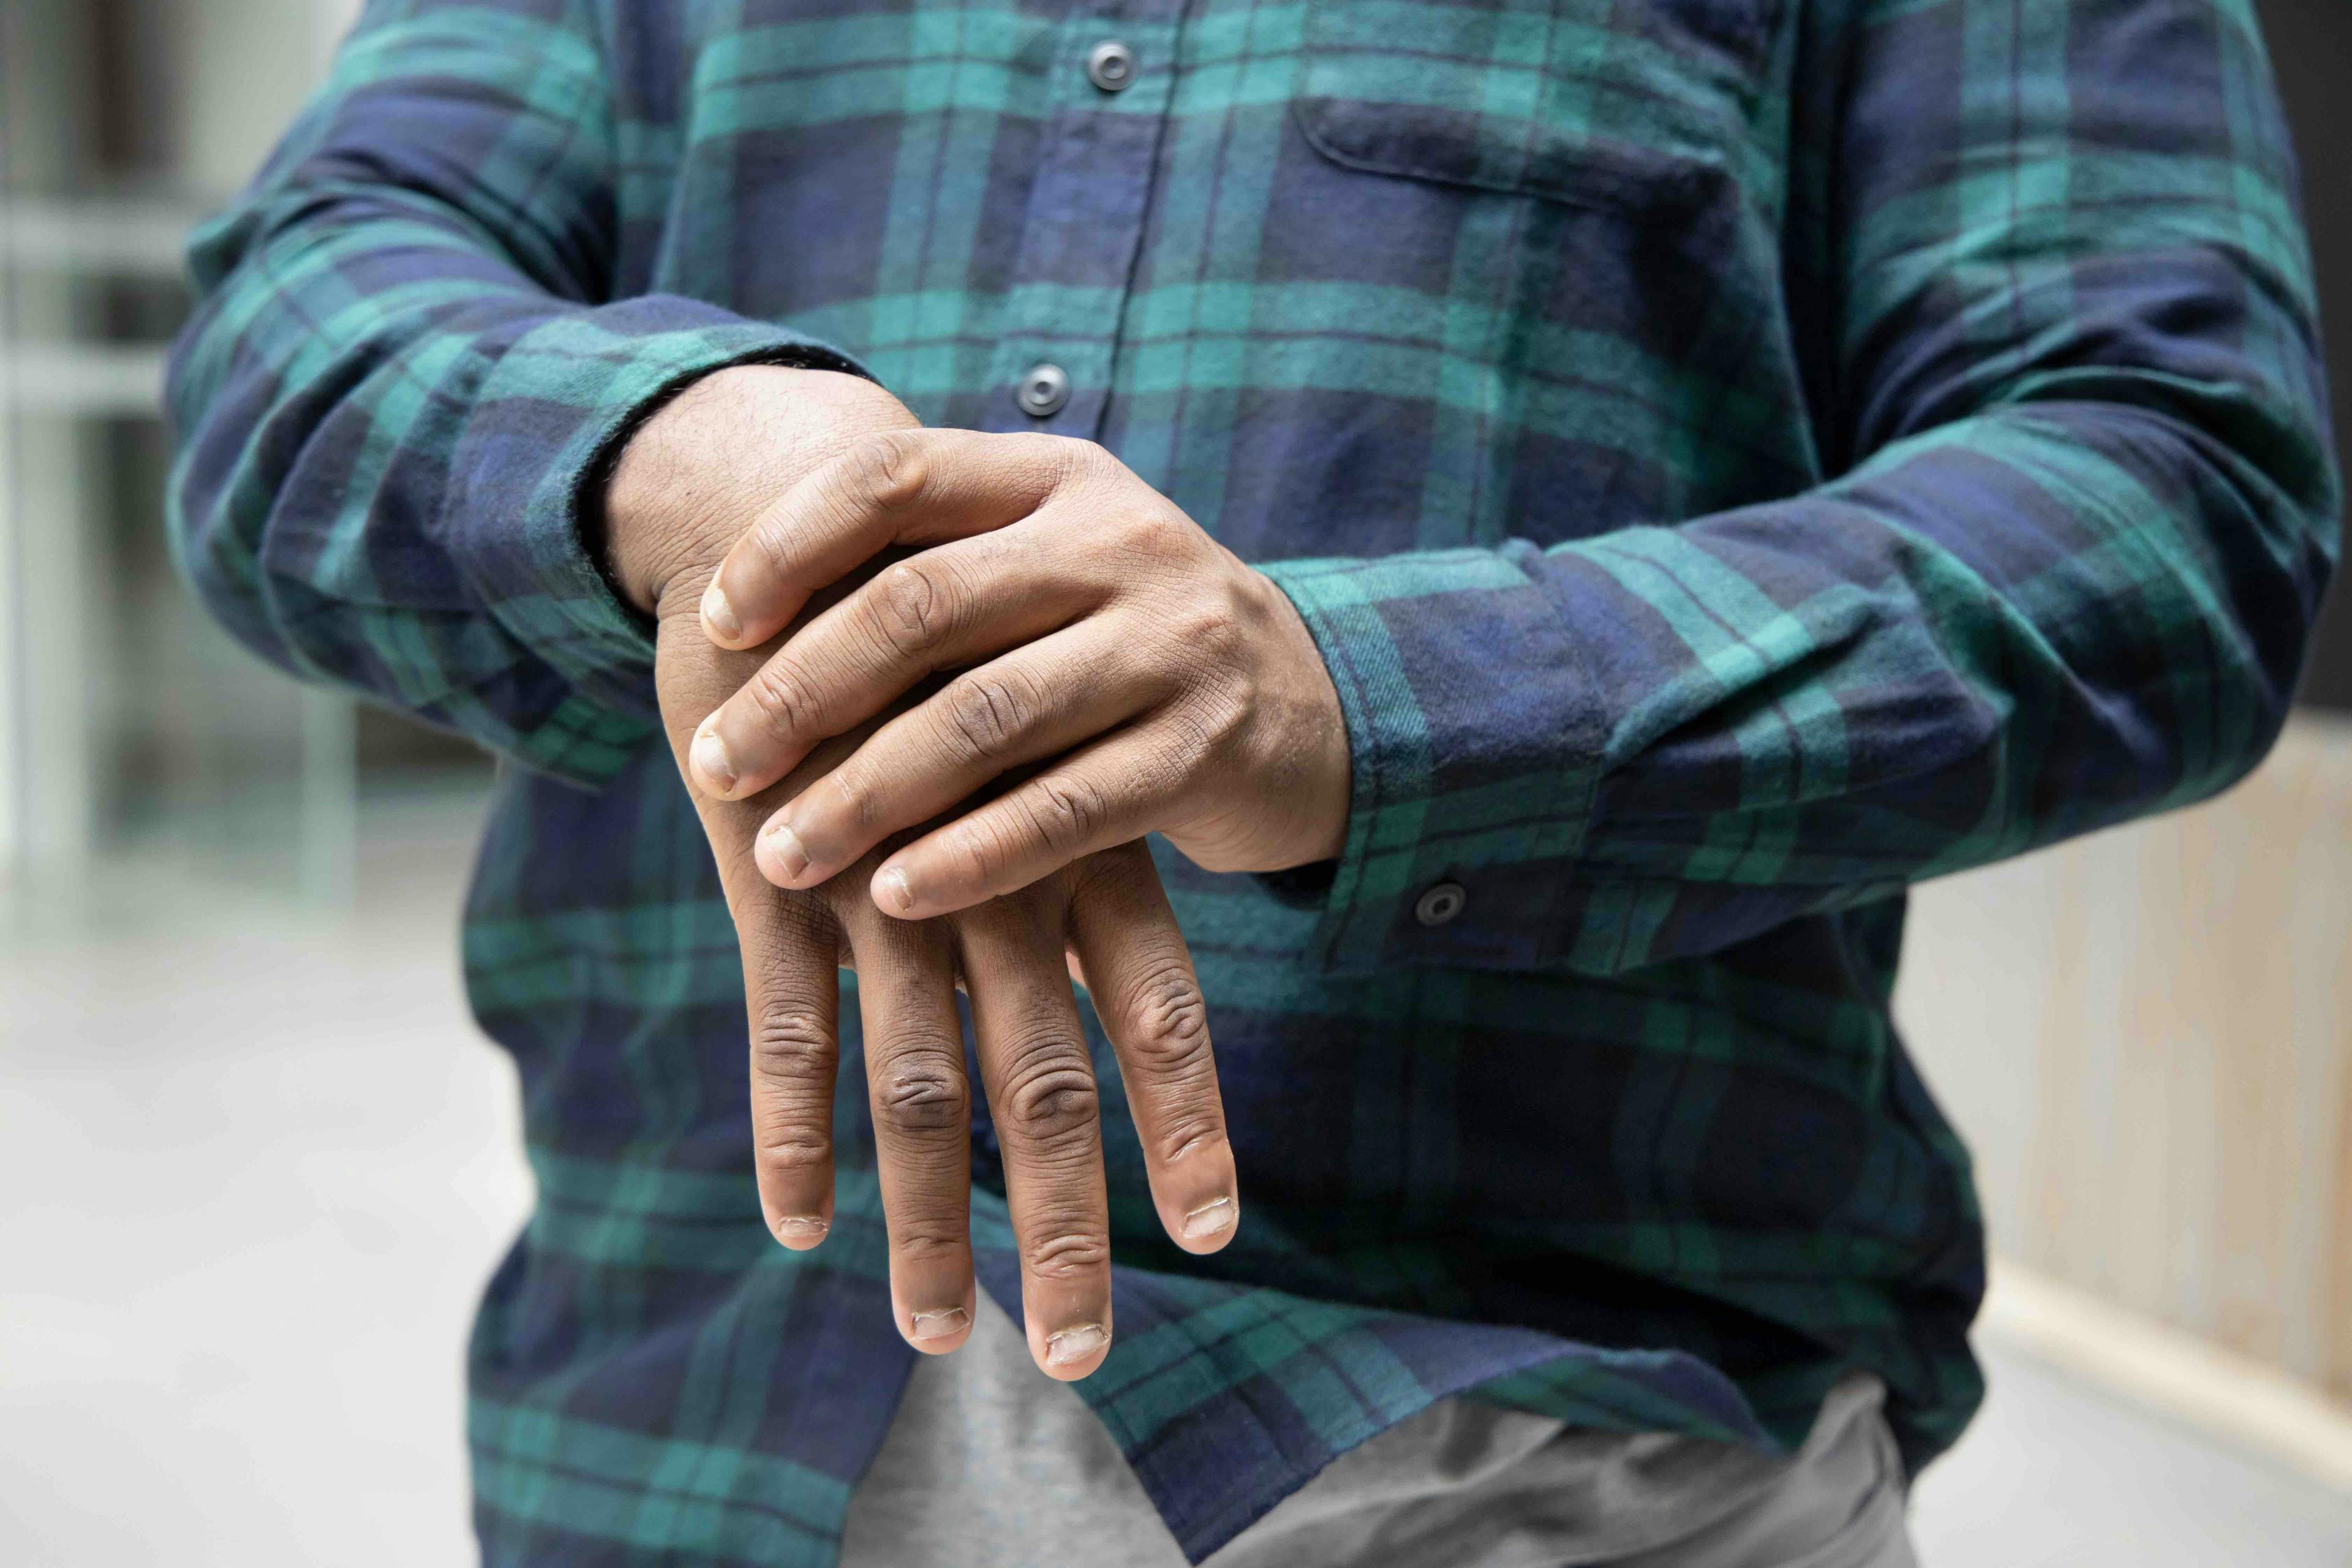 Black patient with arthritis | Image credit: 9nong - stock.adobe.com